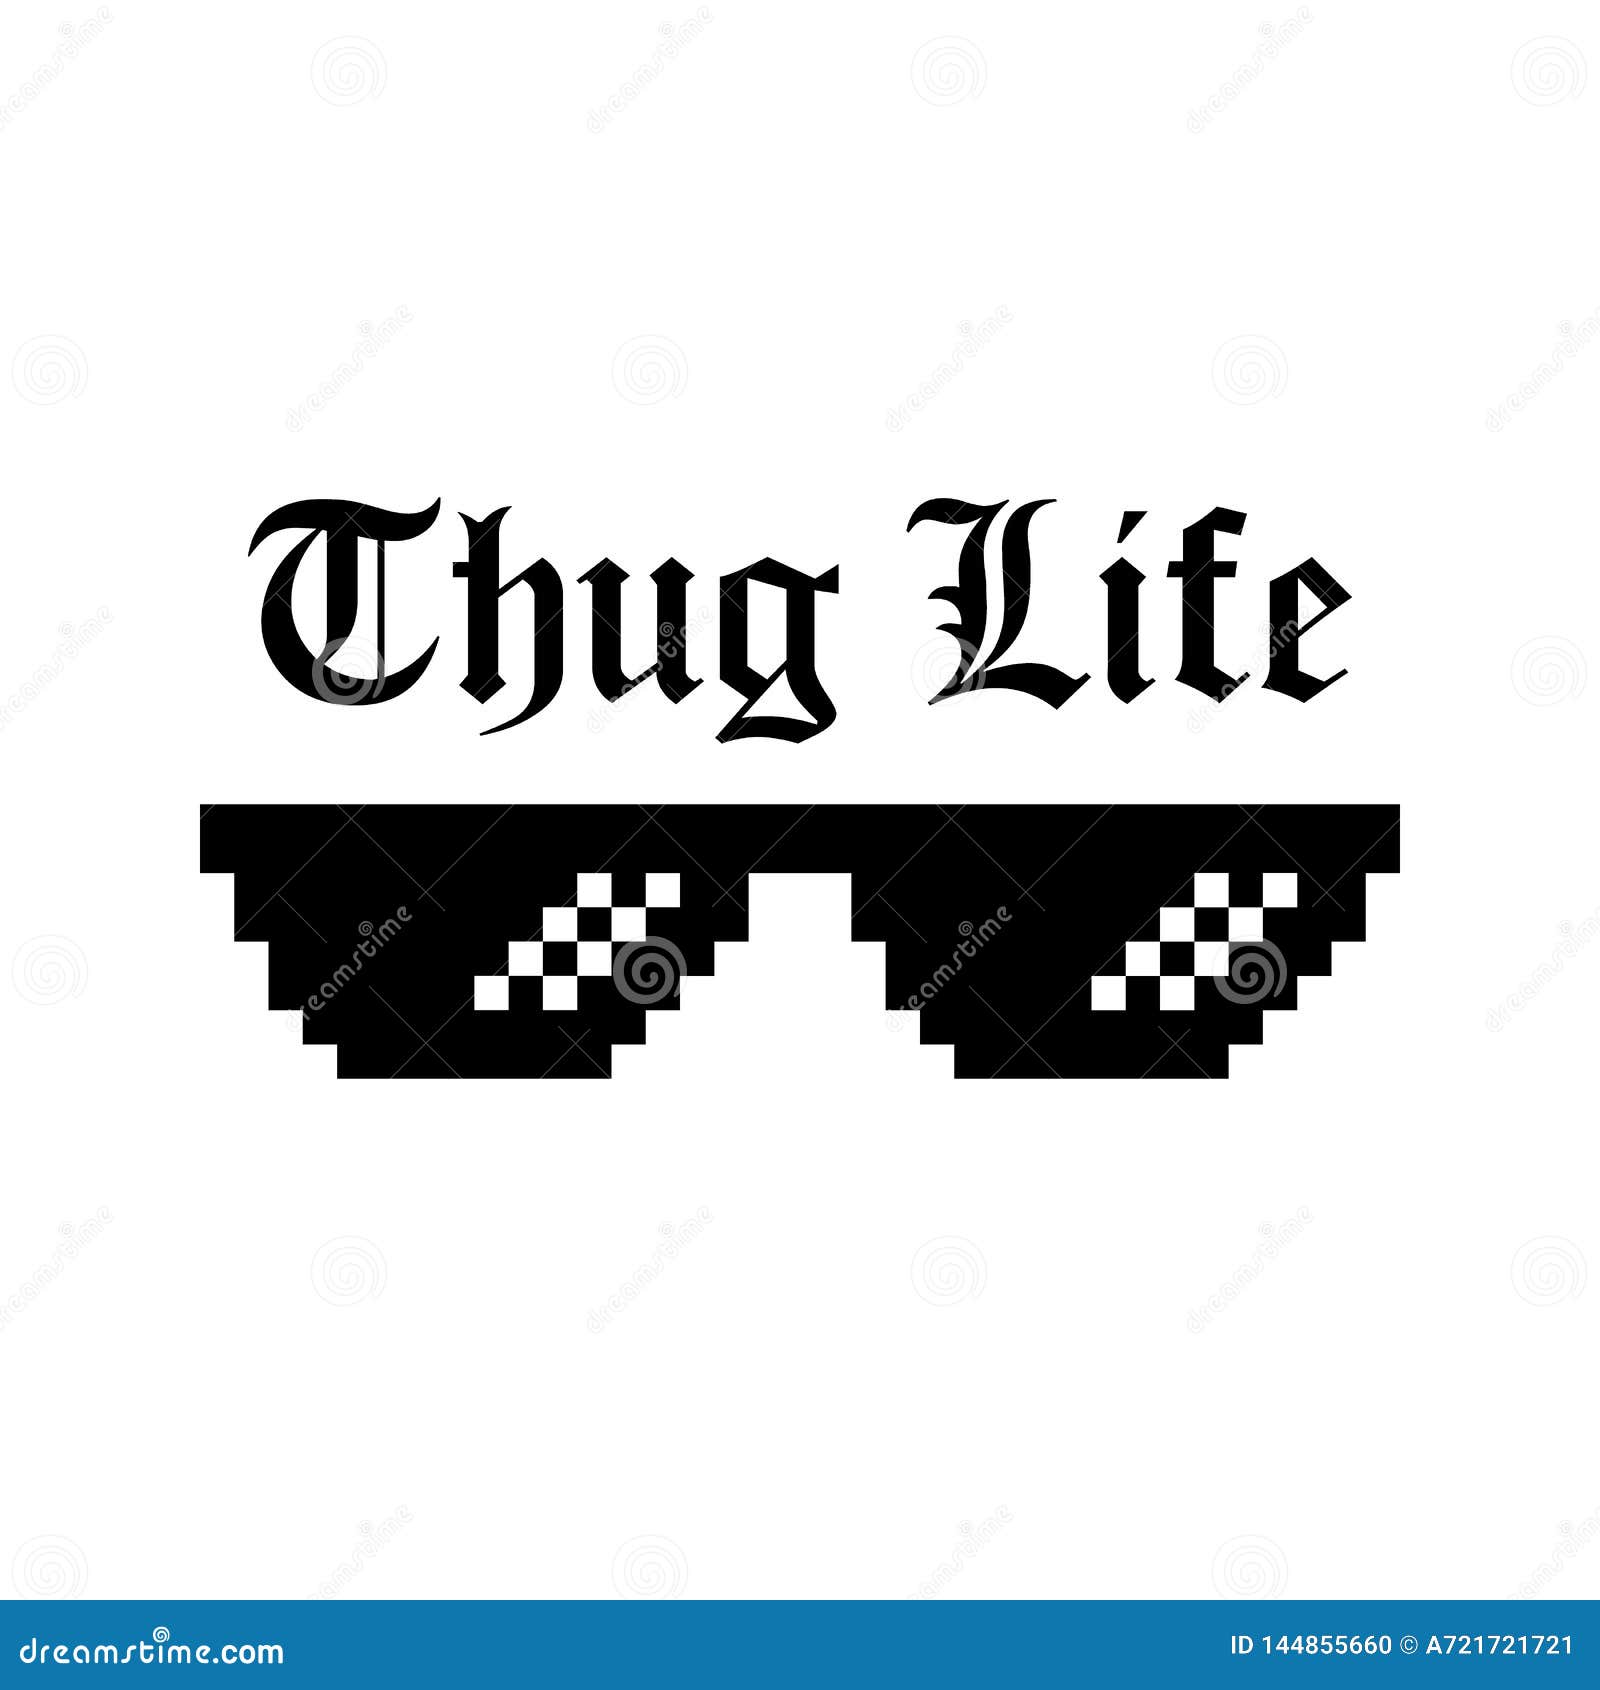 Creative Illustration of Pixel Glasses of Thug Life Meme Isolated on  Background. Ghetto Lifestyle Culture Art Design Stock Illustration -  Illustration of sign, eyeglasses: 144855660